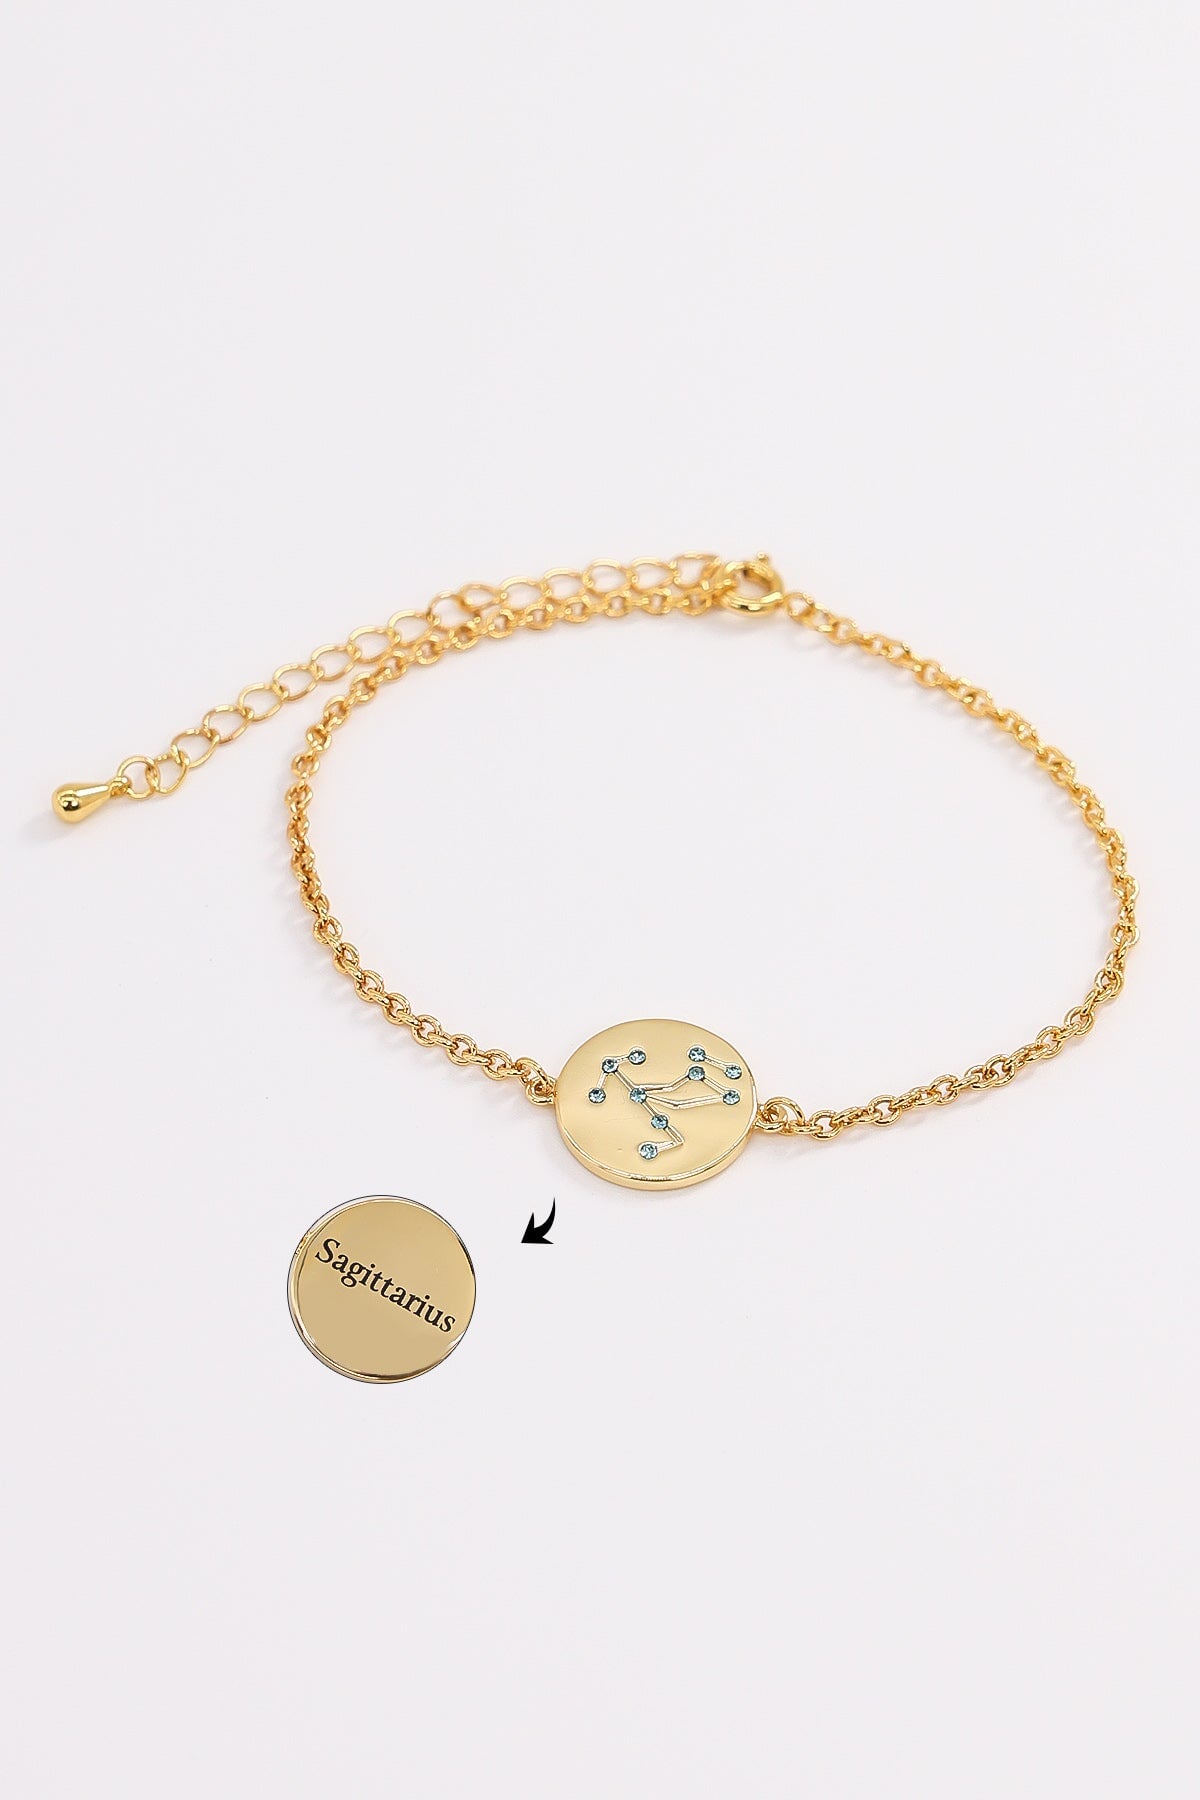 Get Gold Plated Sagittarius Zodiac Charm Bracelet at ₹ 1236 | LBB Shop